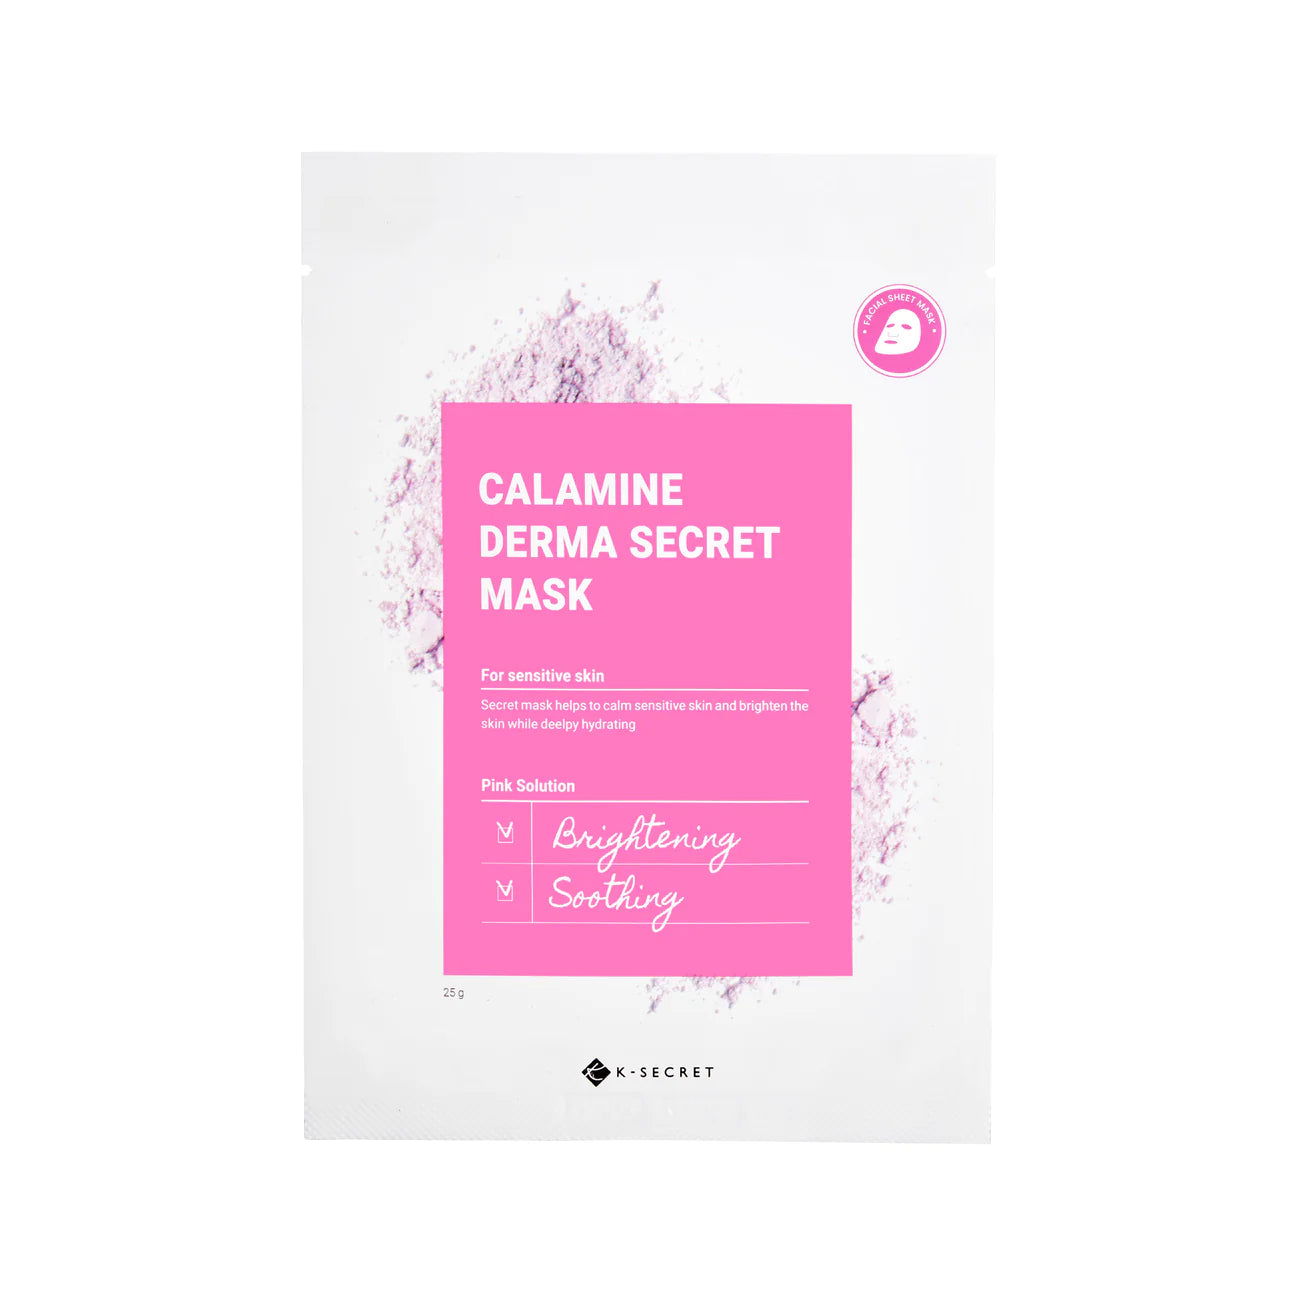 K SECRET calamine derma secret mask pink solution مجموعة اقنعة ورقية بالكلاماين